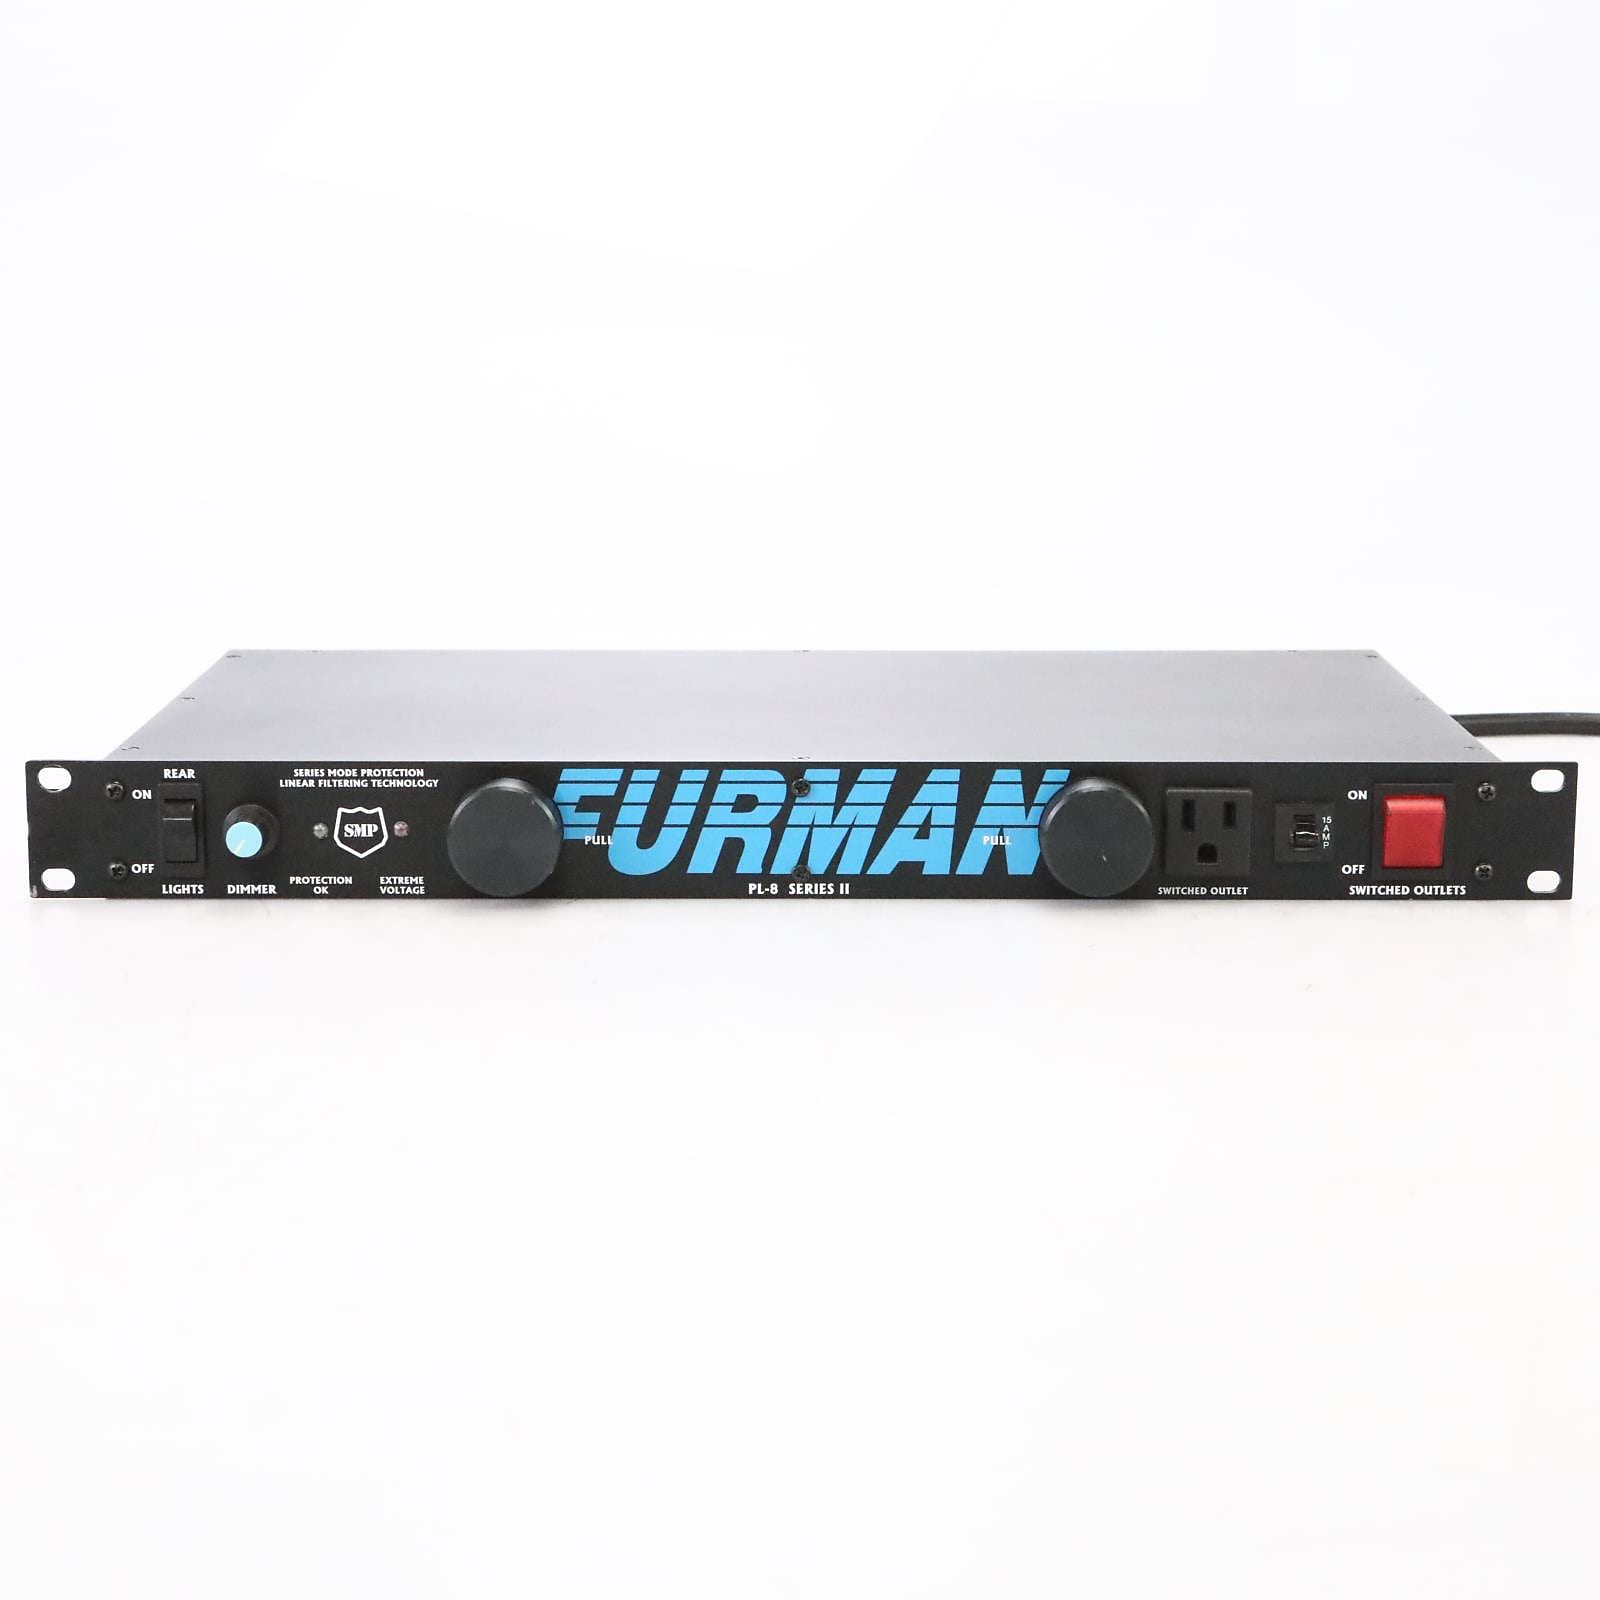 Furman PL-8 Series II Power Conditioner | Reverb